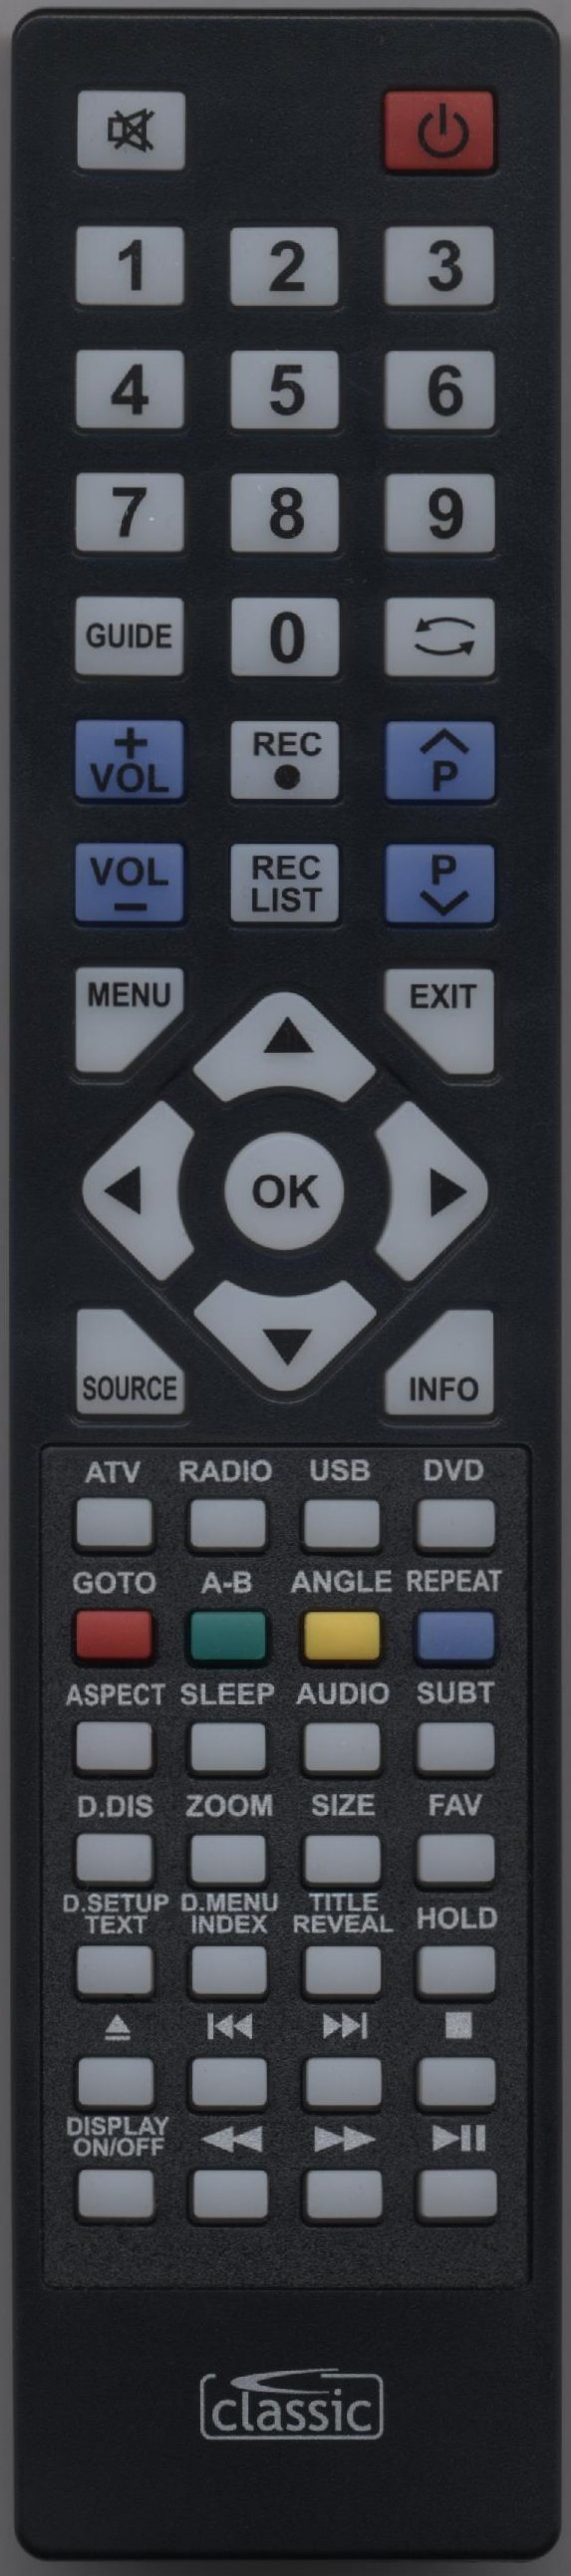 UMC X19/45E Remote Control Alternative